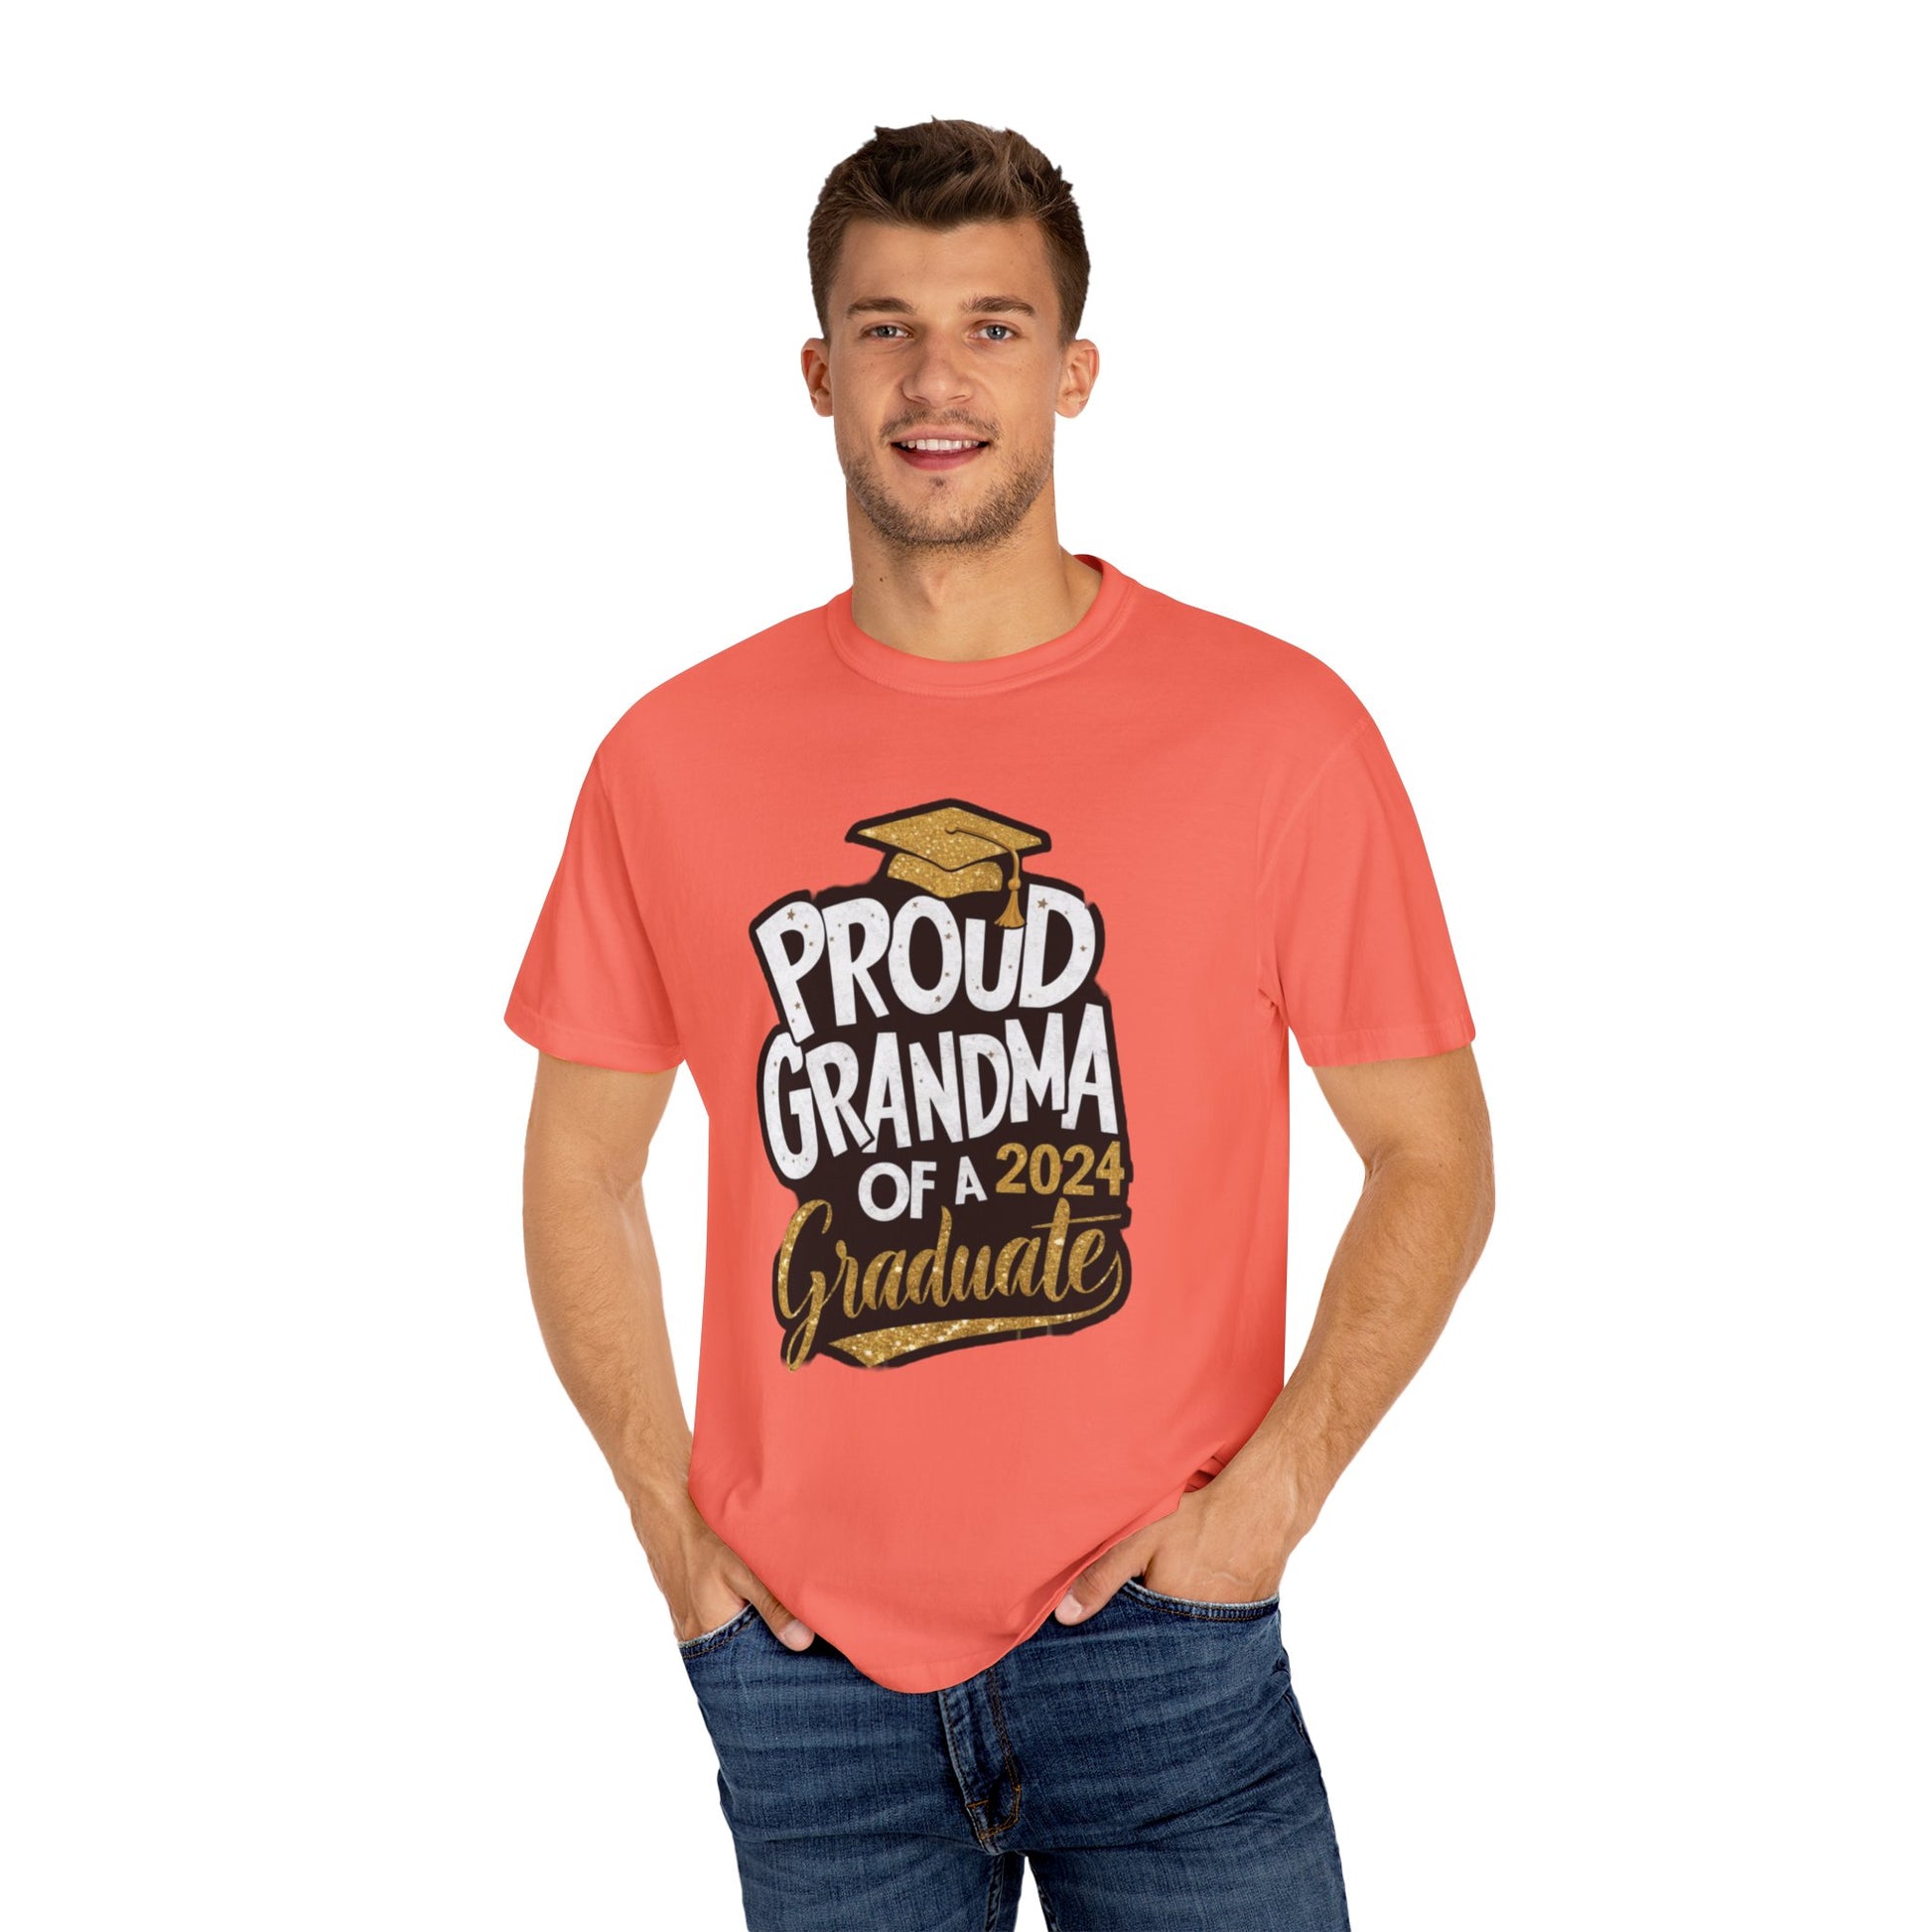 Proud of Grandma 2024 Graduate Unisex Garment-dyed T-shirt Cotton Funny Humorous Graphic Soft Premium Unisex Men Women Bright Salmon T-shirt Birthday Gift-33